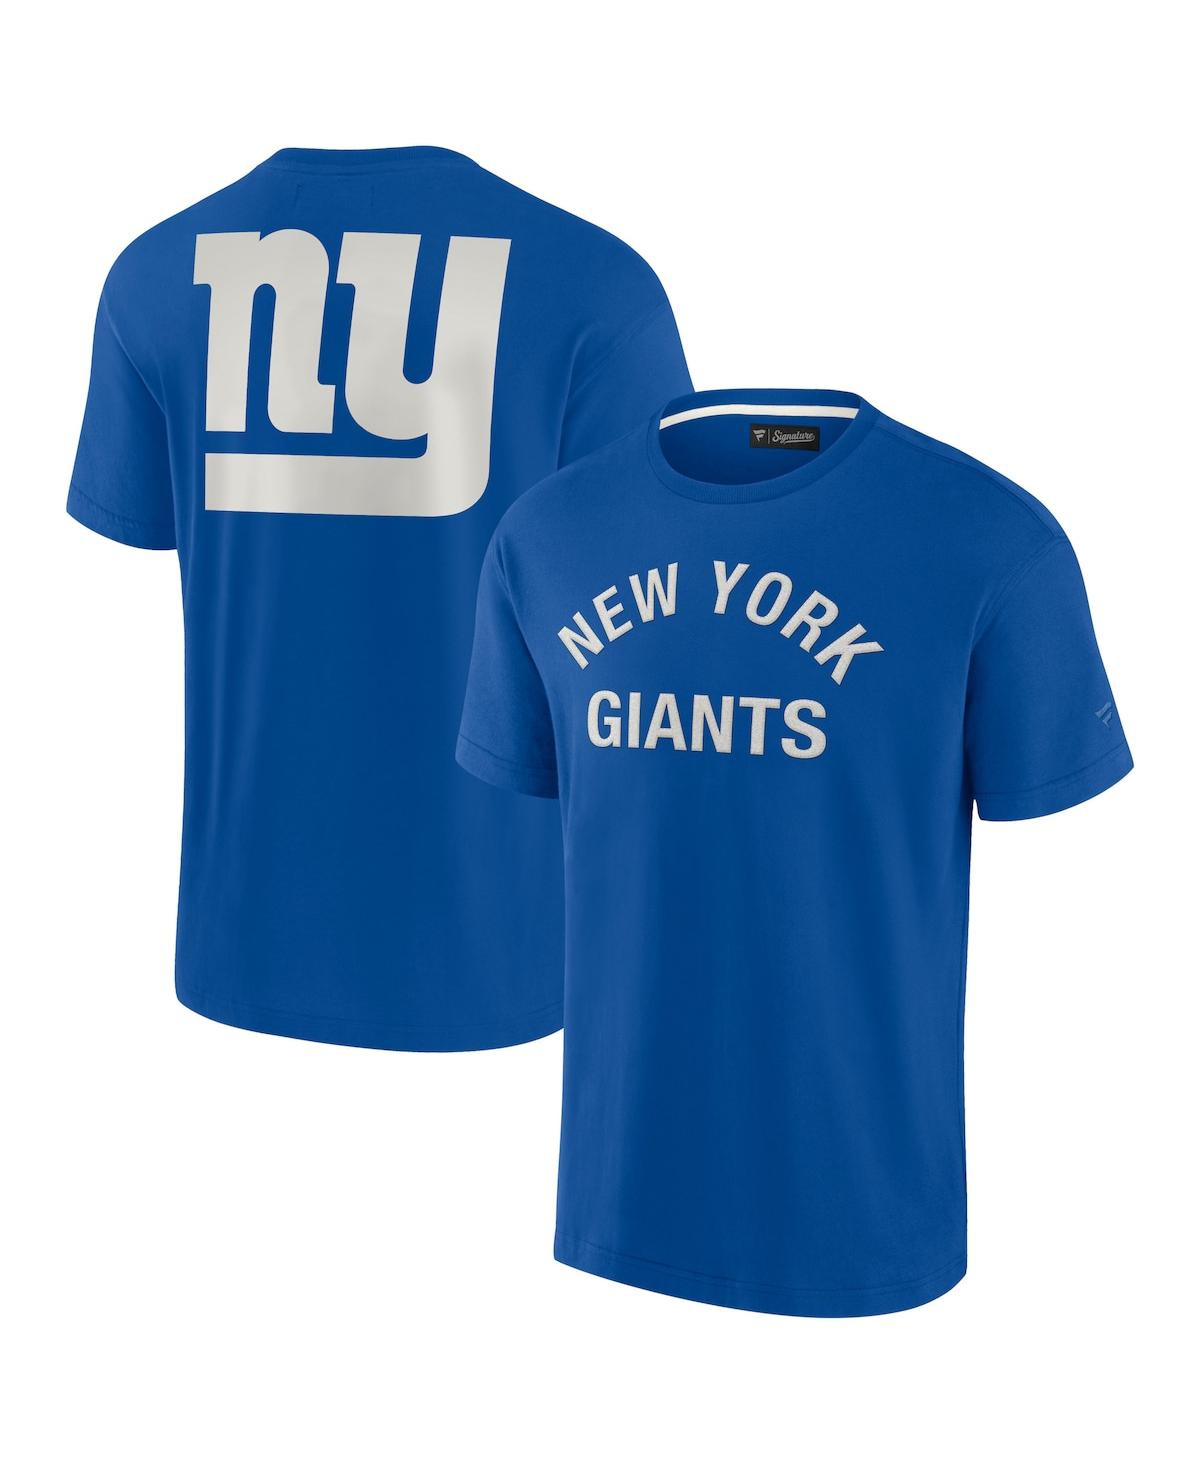 Fanatics Signature Men's And Women's  Royal New York Giants Super Soft Short Sleeve T-shirt